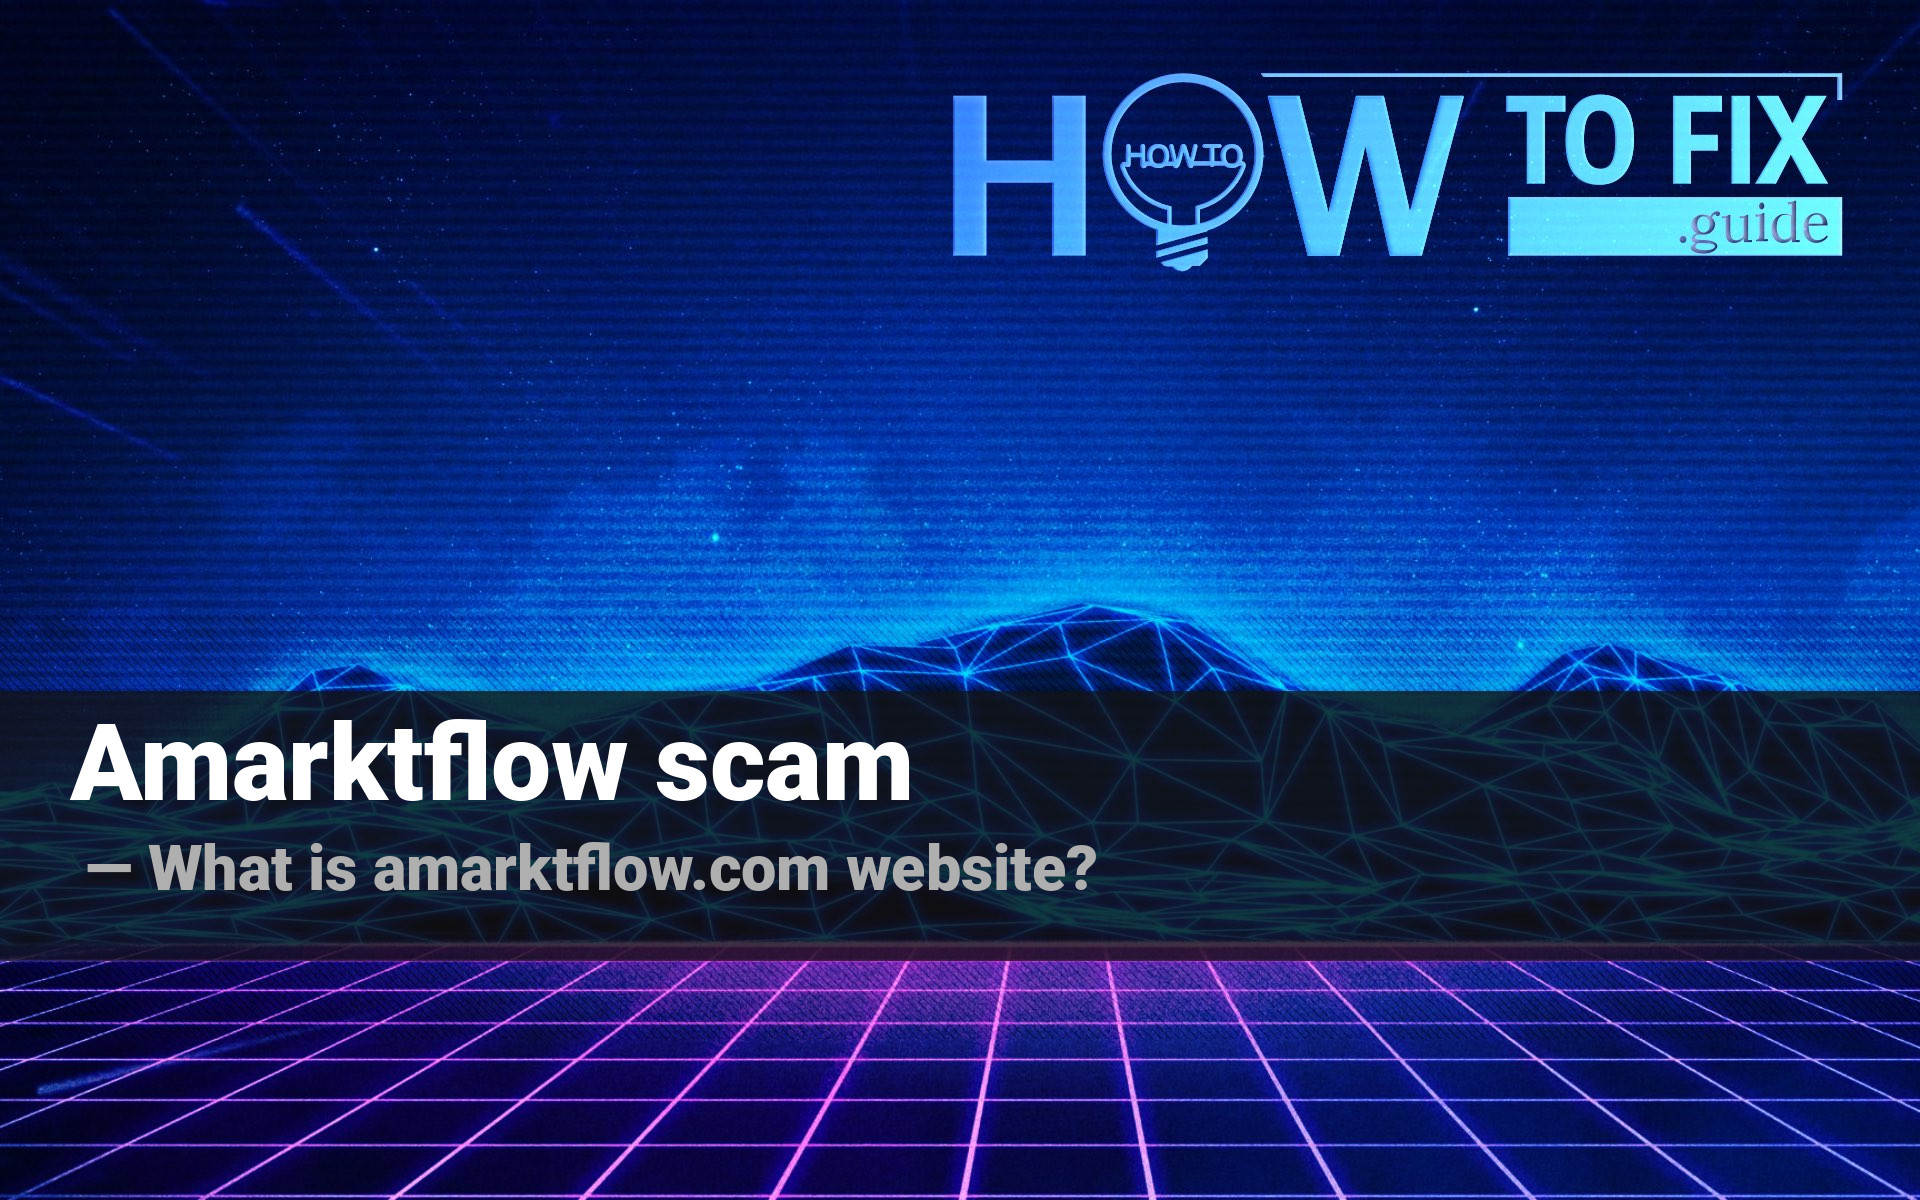 Amarktflow scam. What is amarktflow.com page?